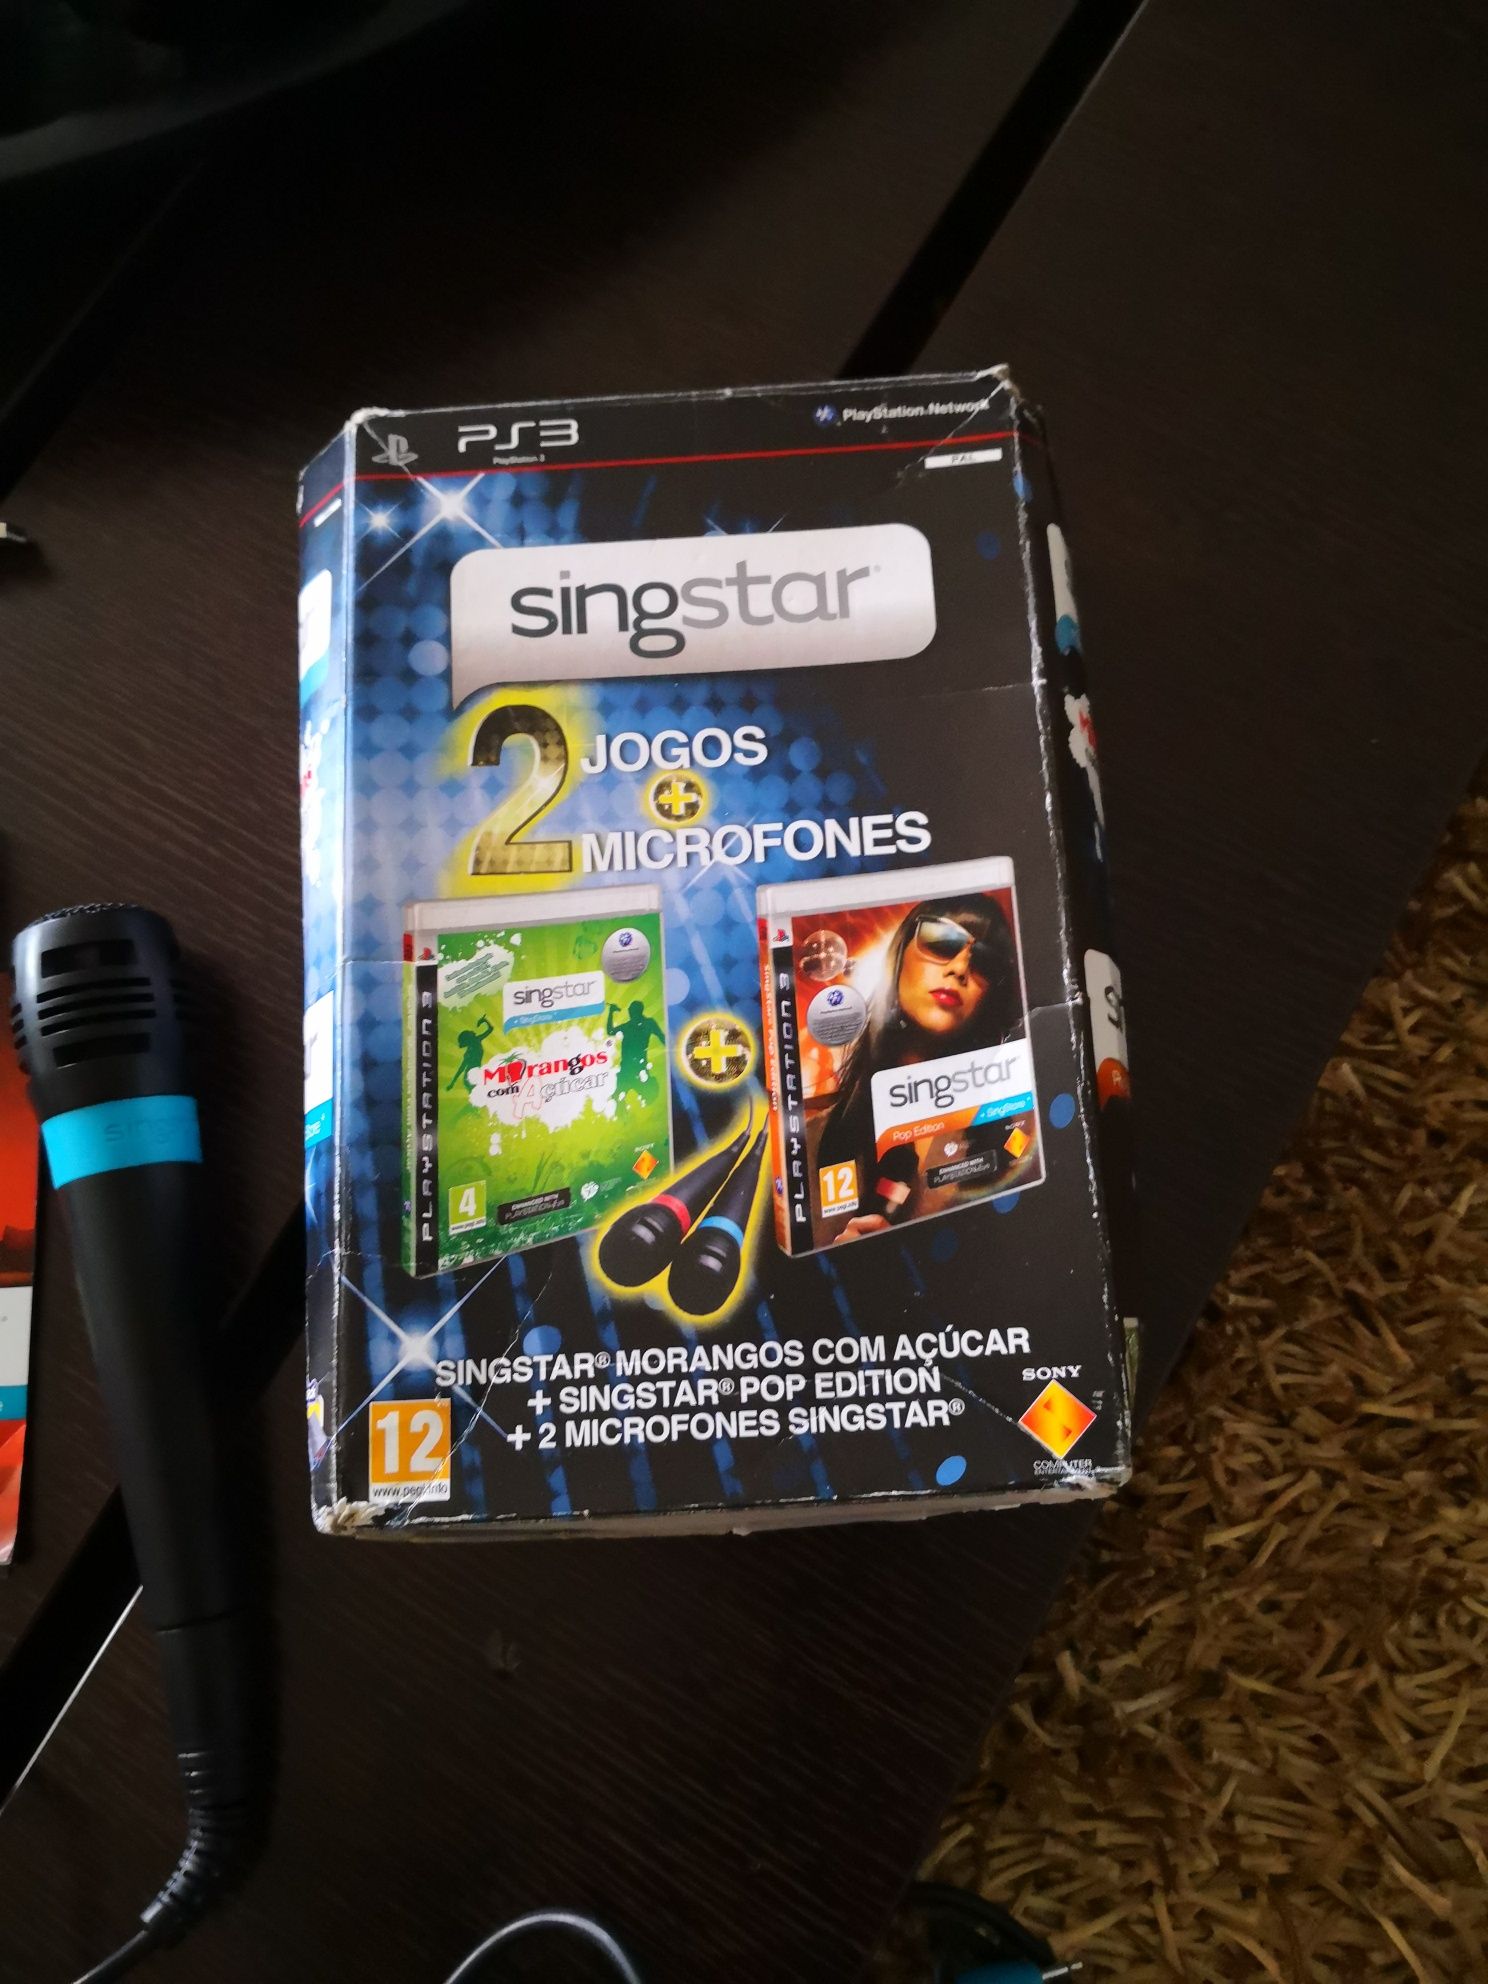 Singstar 2 Microfone para PS3 Karaoke.